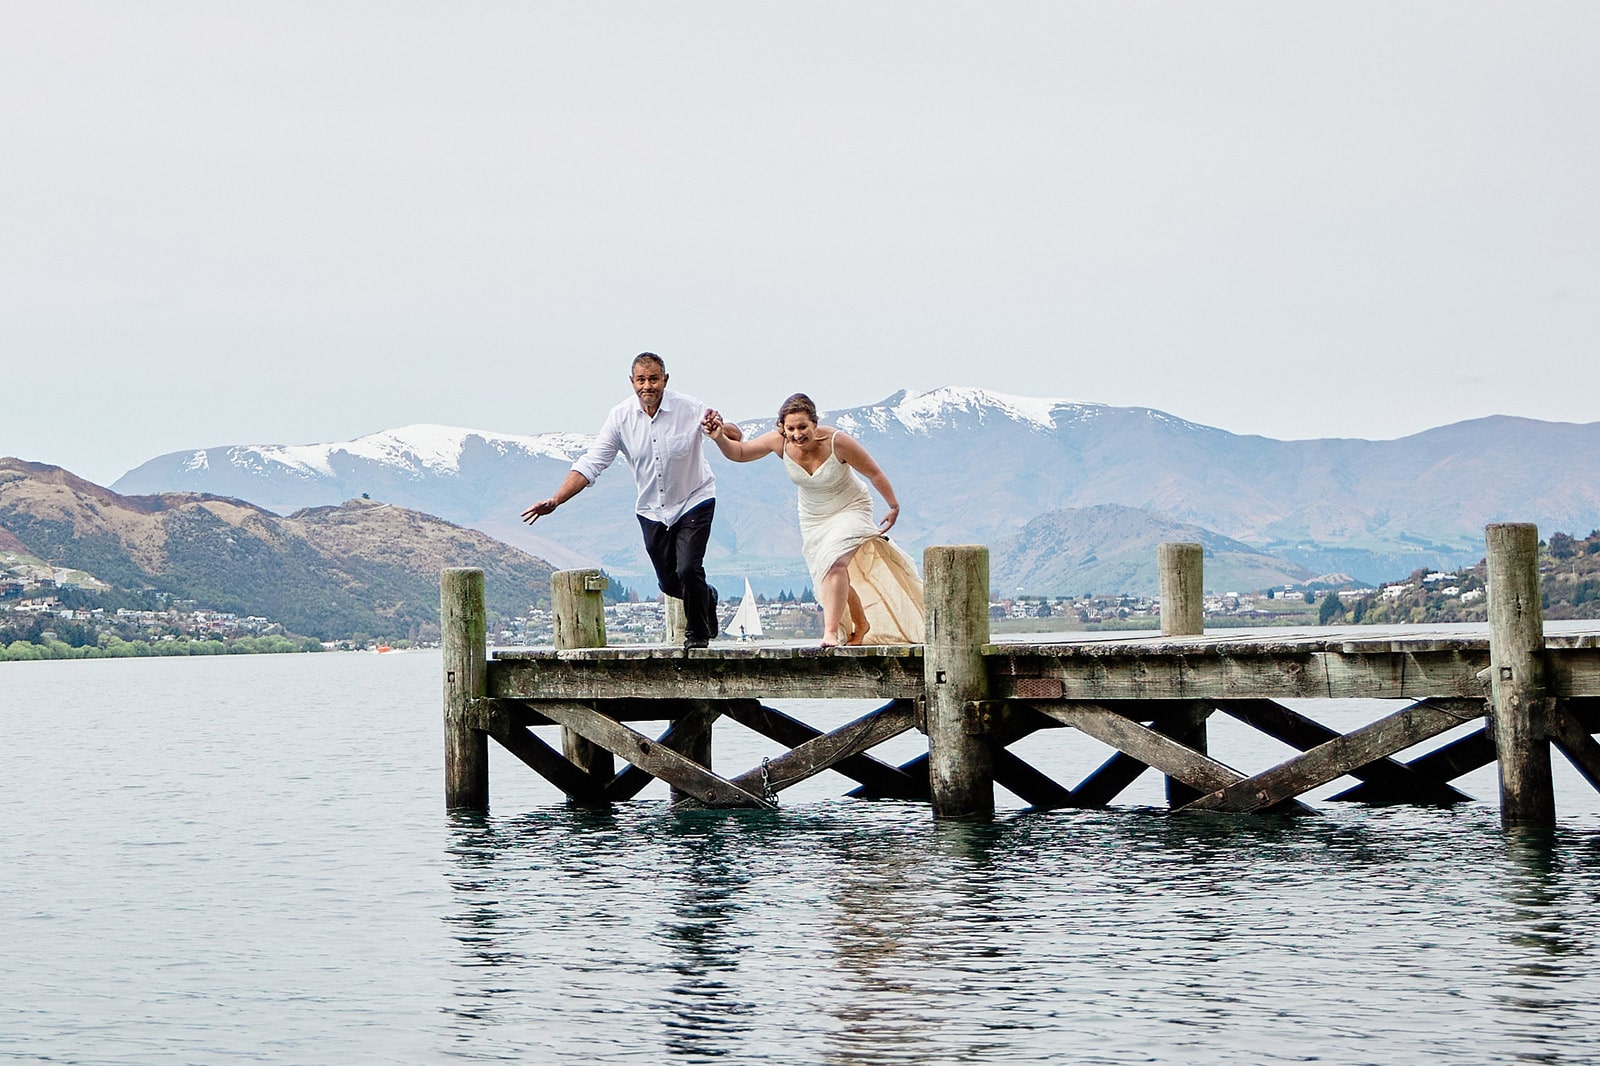 Wedding couple jump into the lake